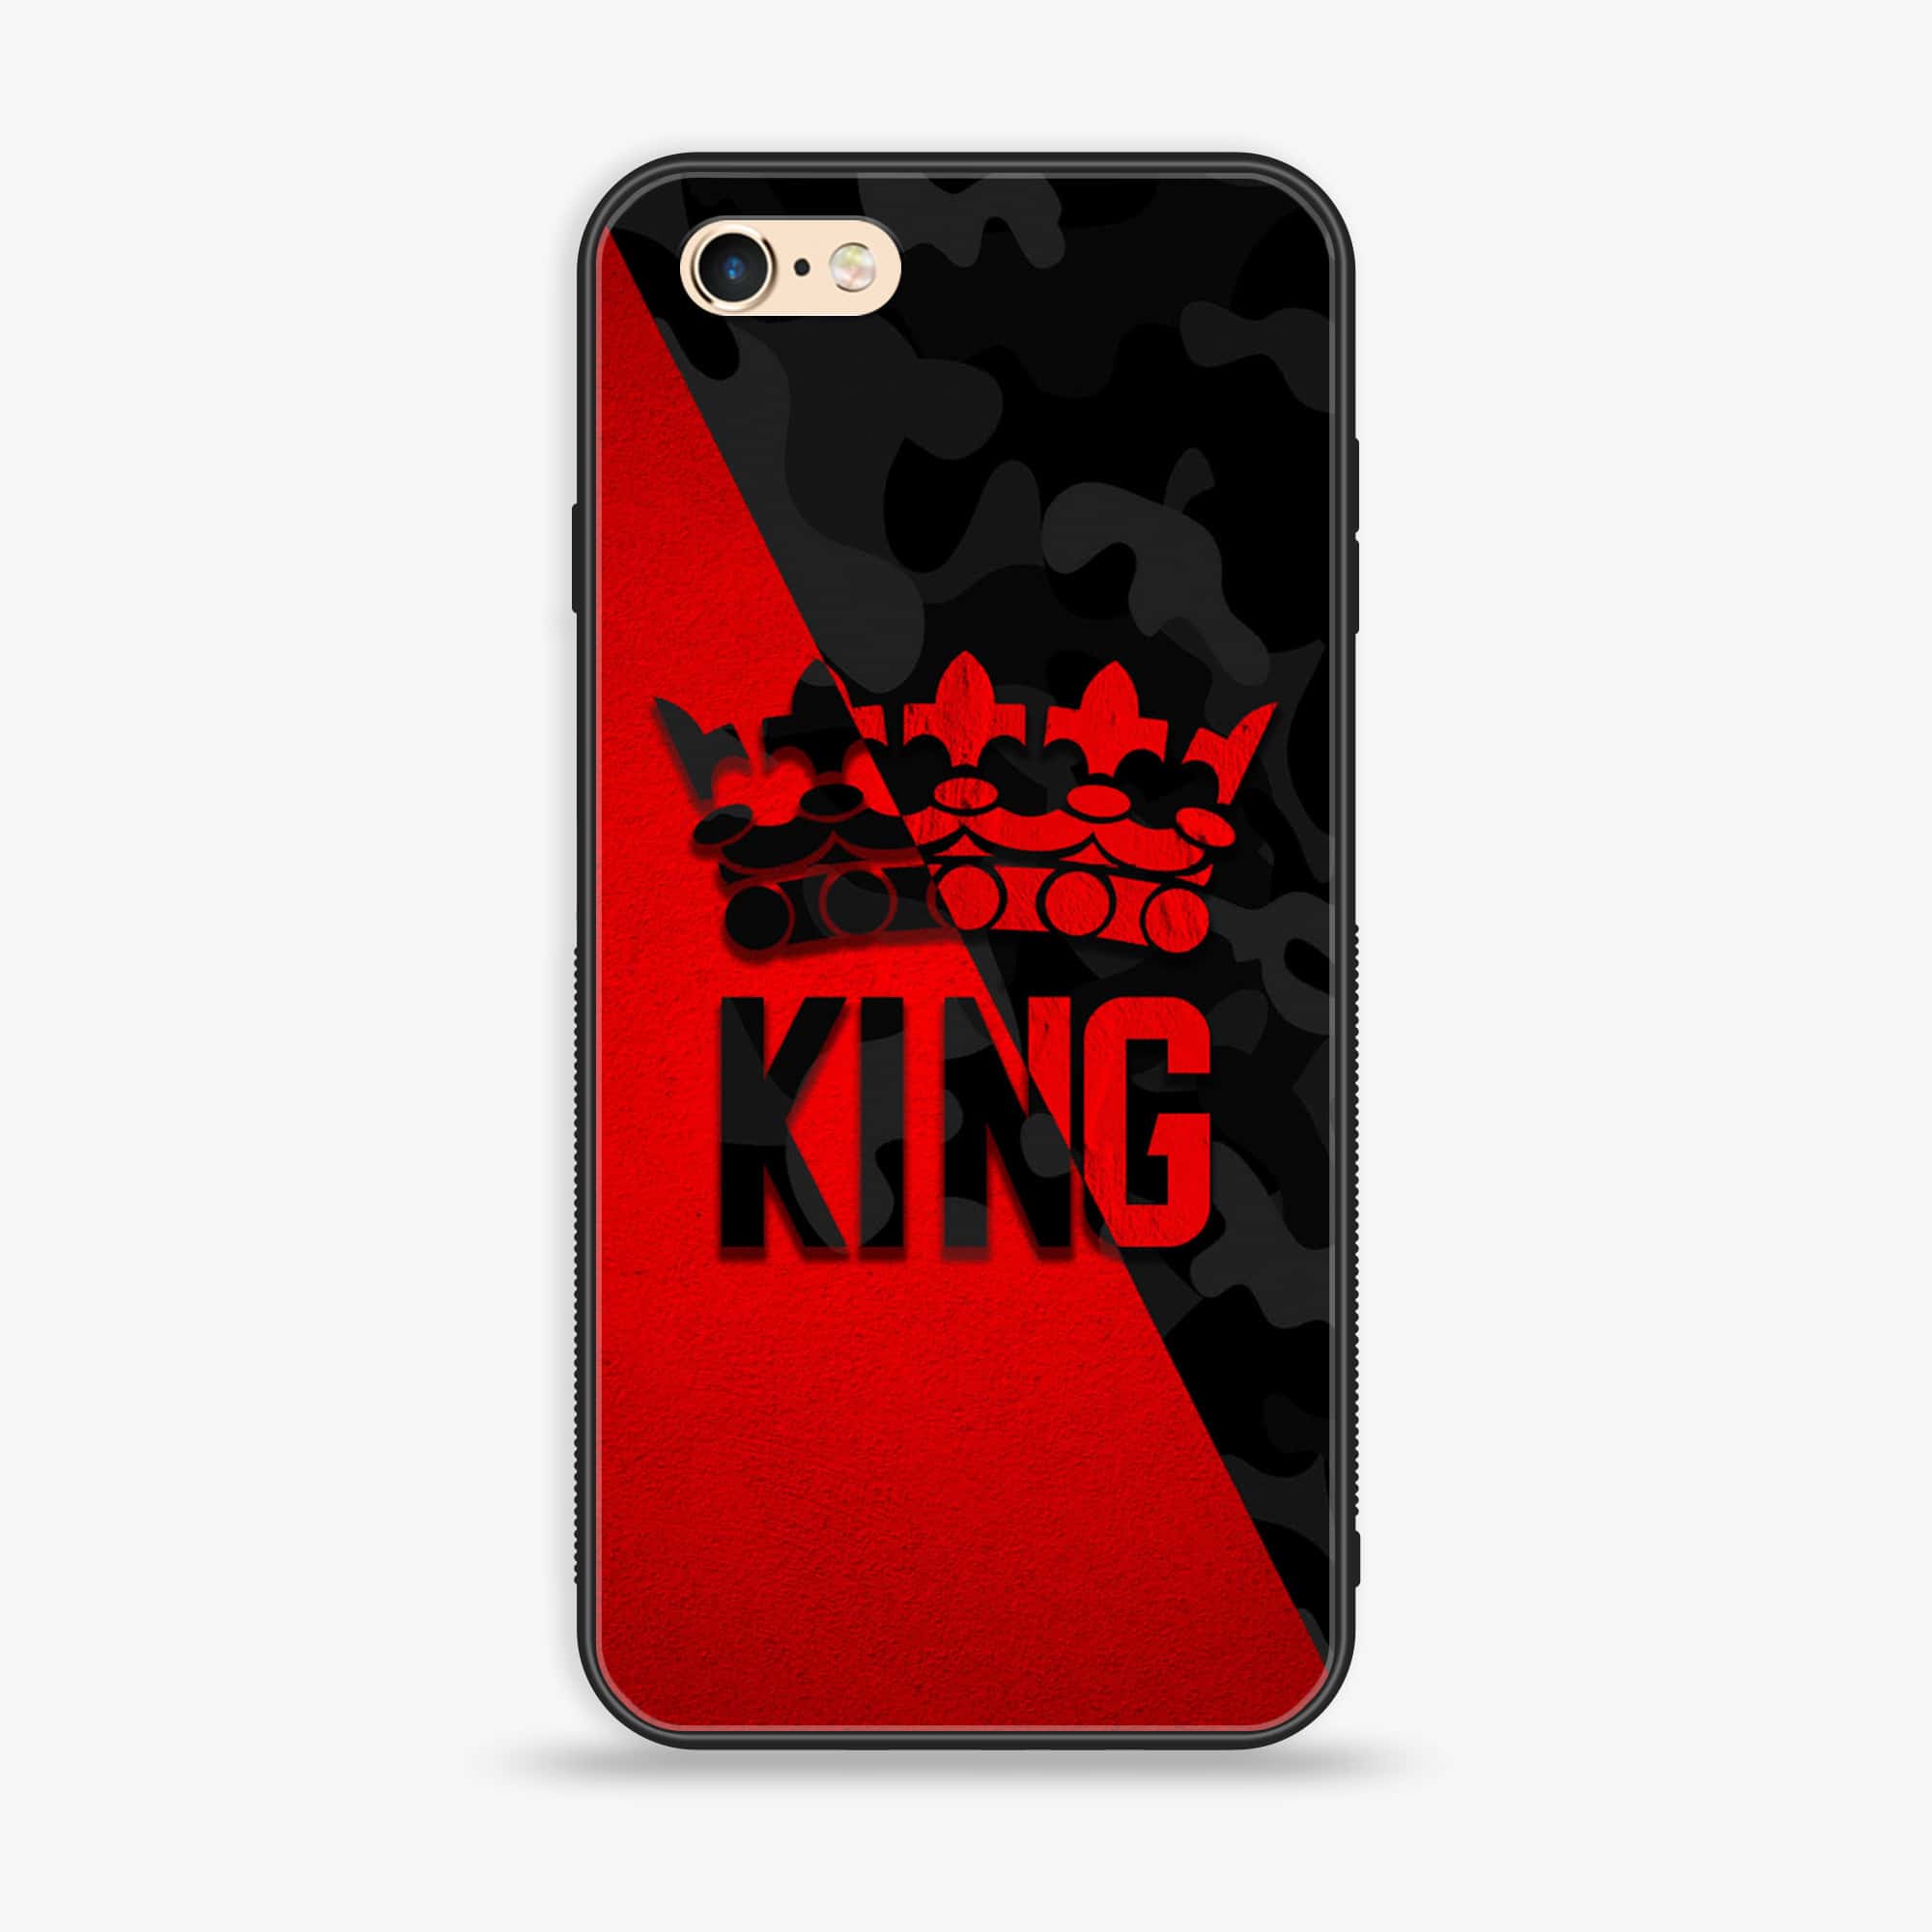 iPhone 6 - King Series V 2.0 - Premium Printed Glass soft Bumper shock Proof Case